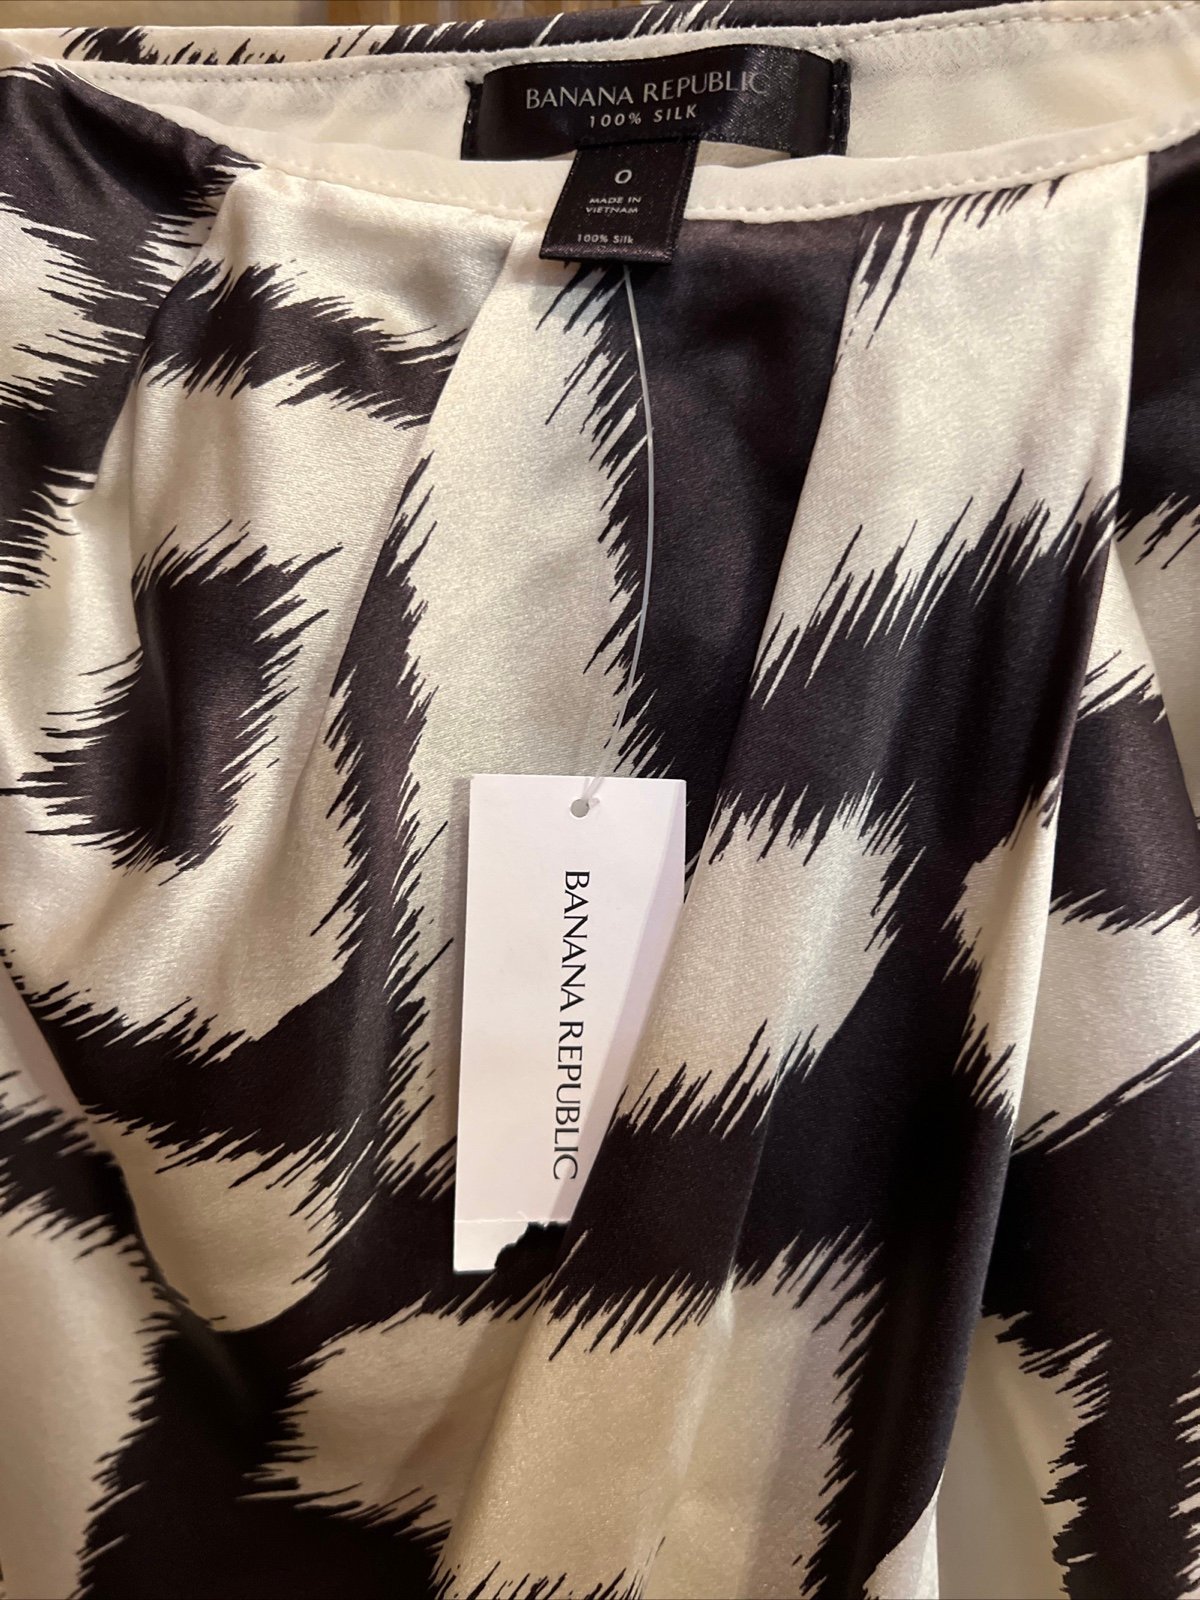 big discount Banana Republic Bliss Silk Draped Skirt oJf4VwqUo Factory Price